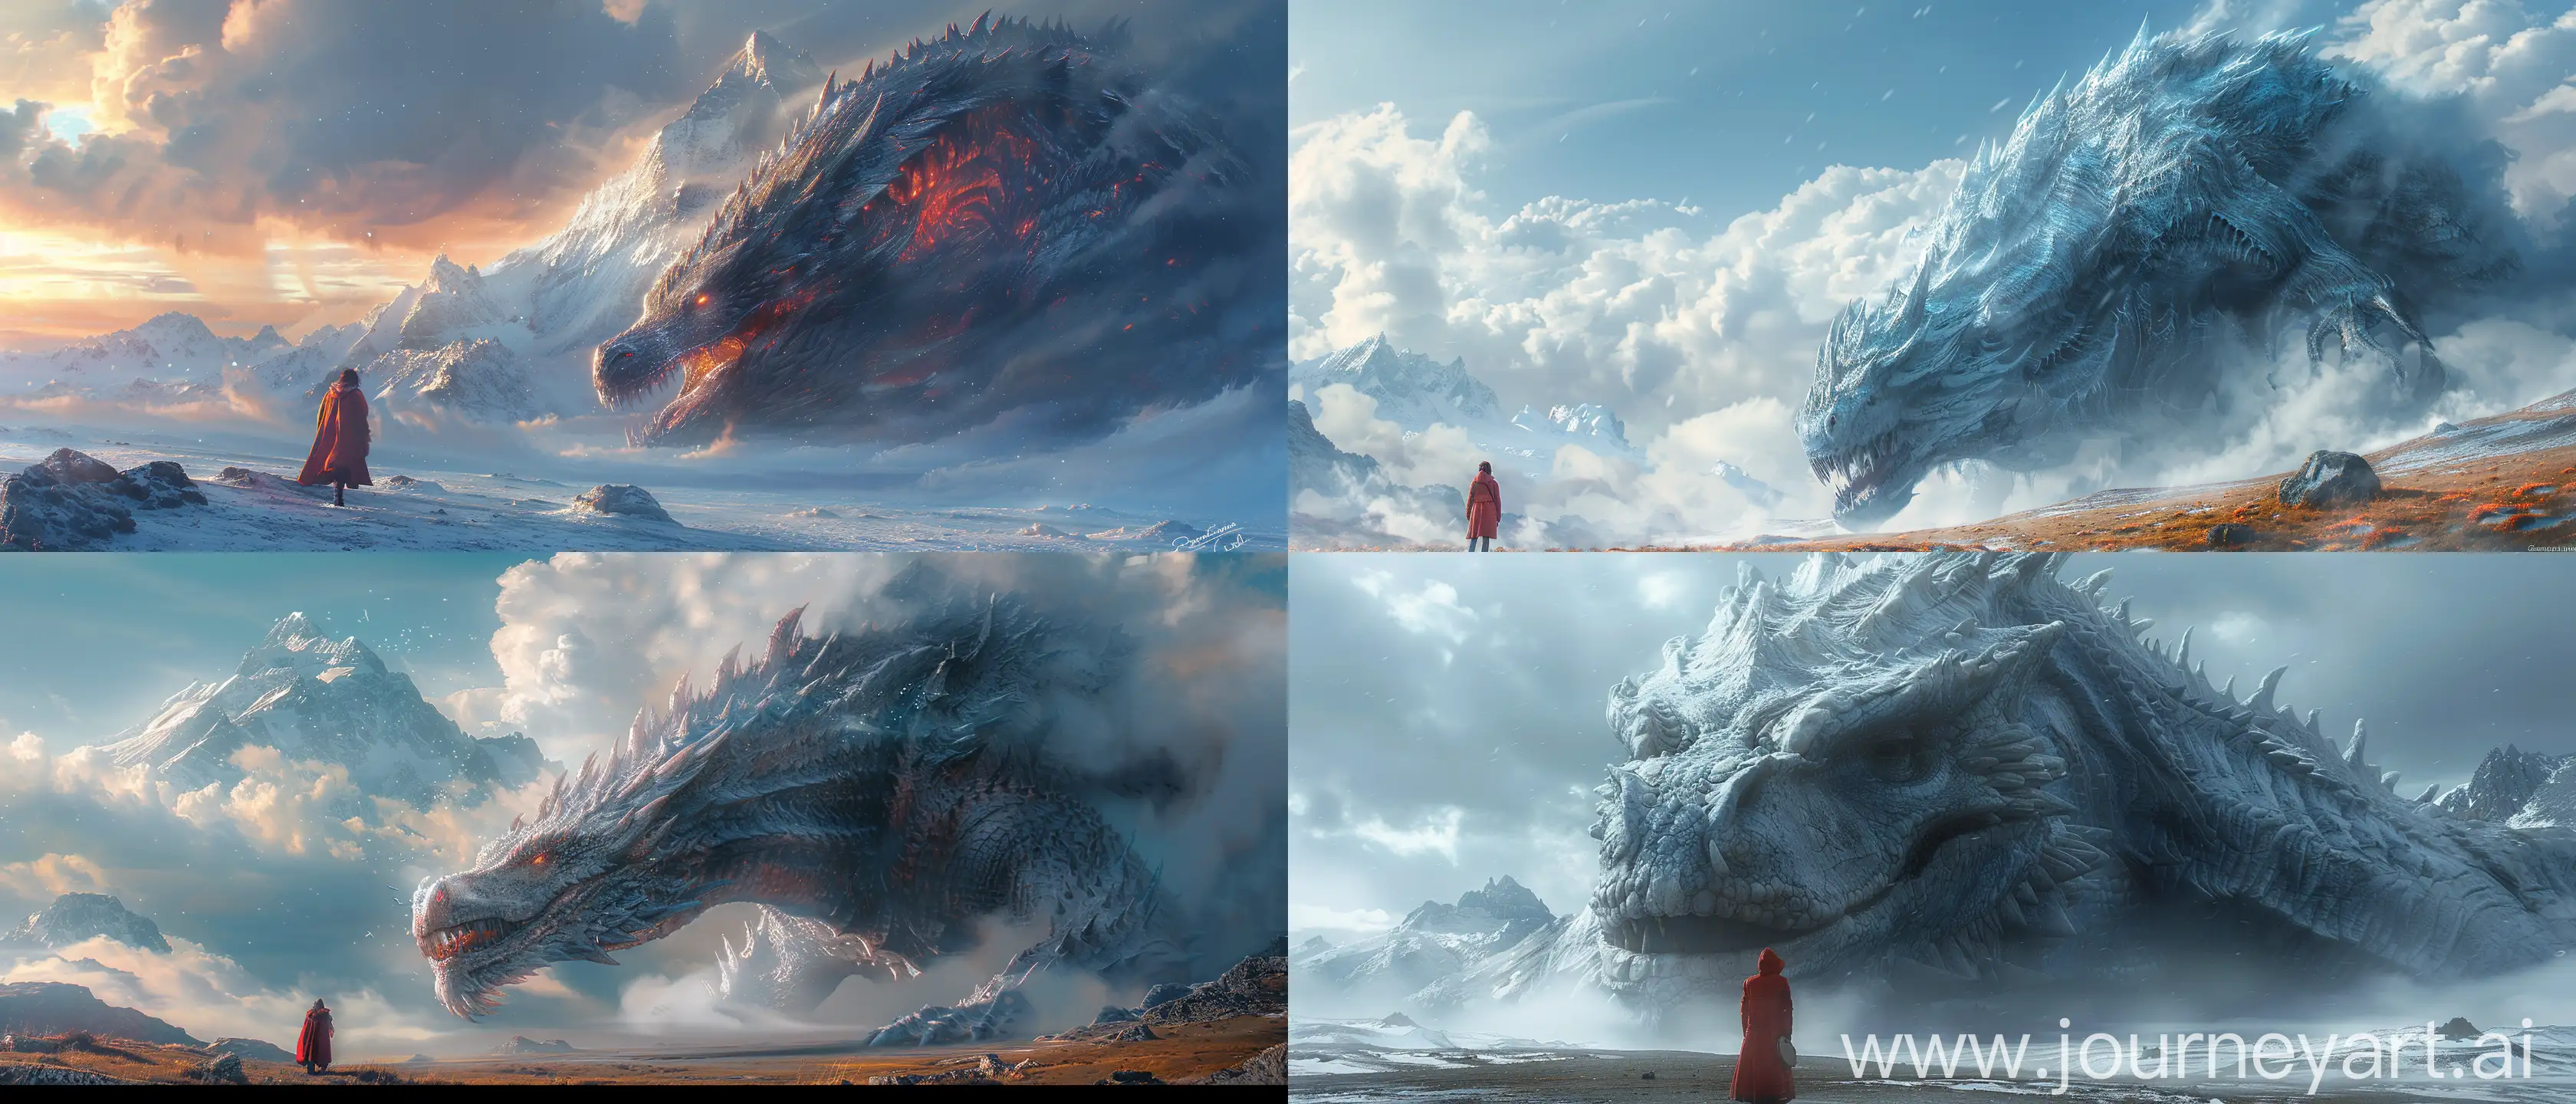 Epic-Fantasy-Landscape-Mountain-Transformed-into-Dragon